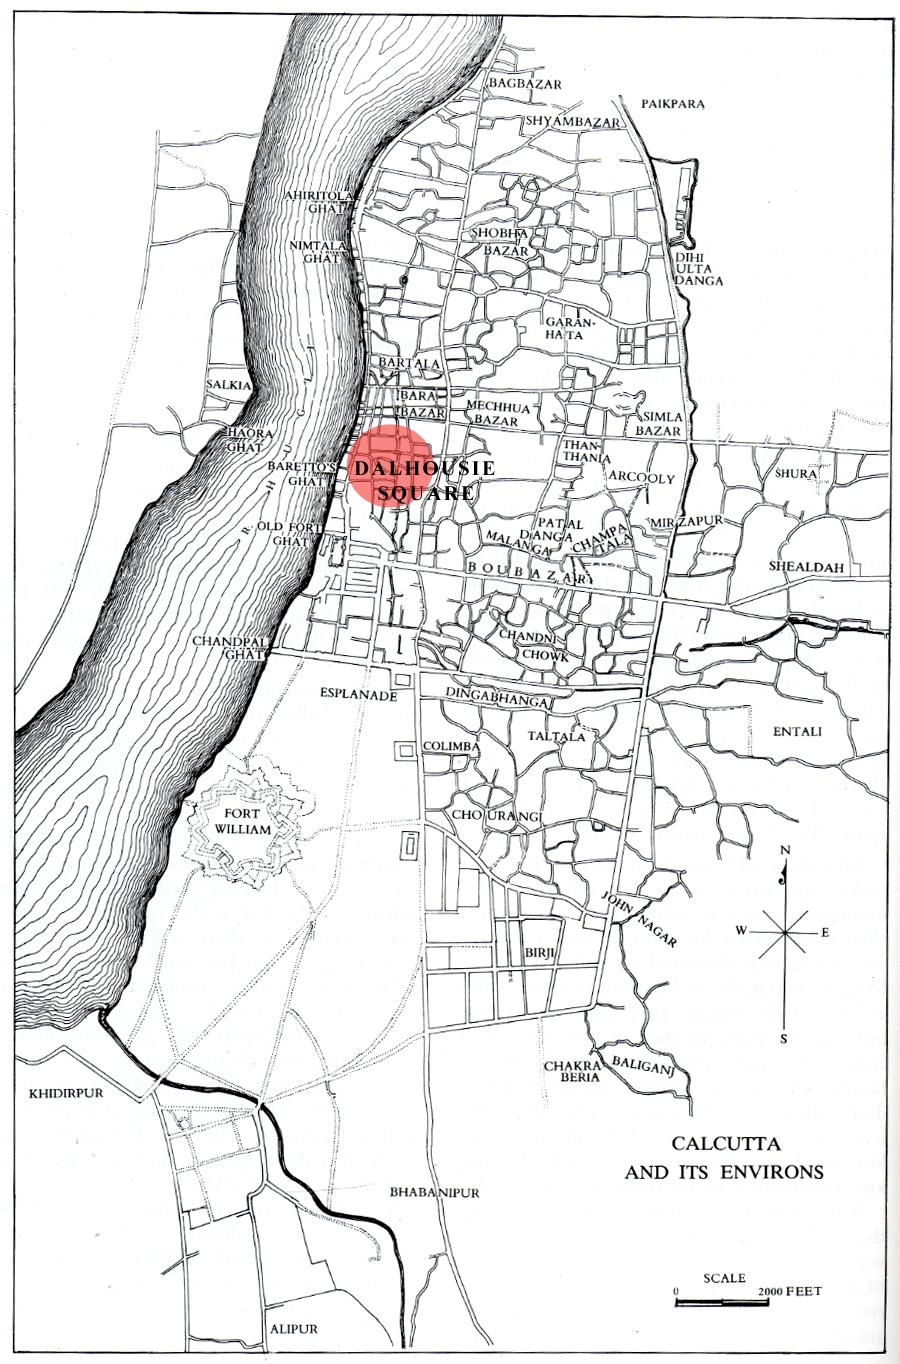 Figure 17: Old Calcutta based on Upjohn's Survey 1792-93, showing location of Dalhousie Square (Source: P 22, Chaudhuri, Sukanta. ed.